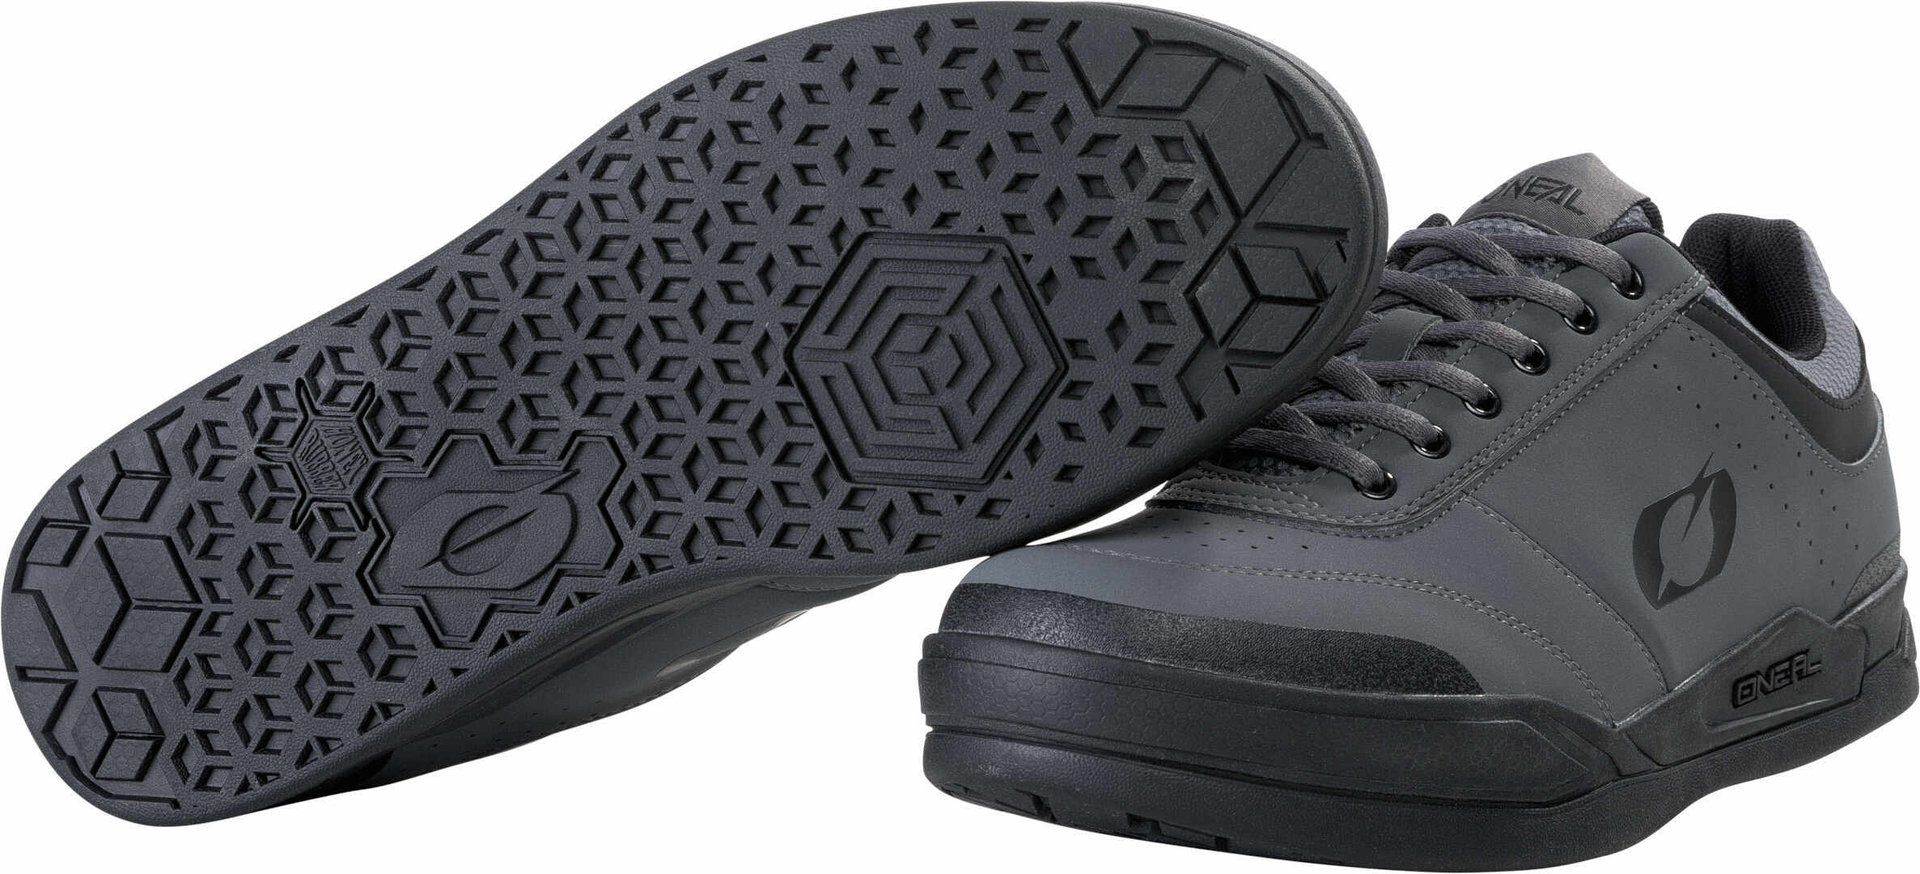 Oneal Pumps Flat Chaussures Noir Gris 40